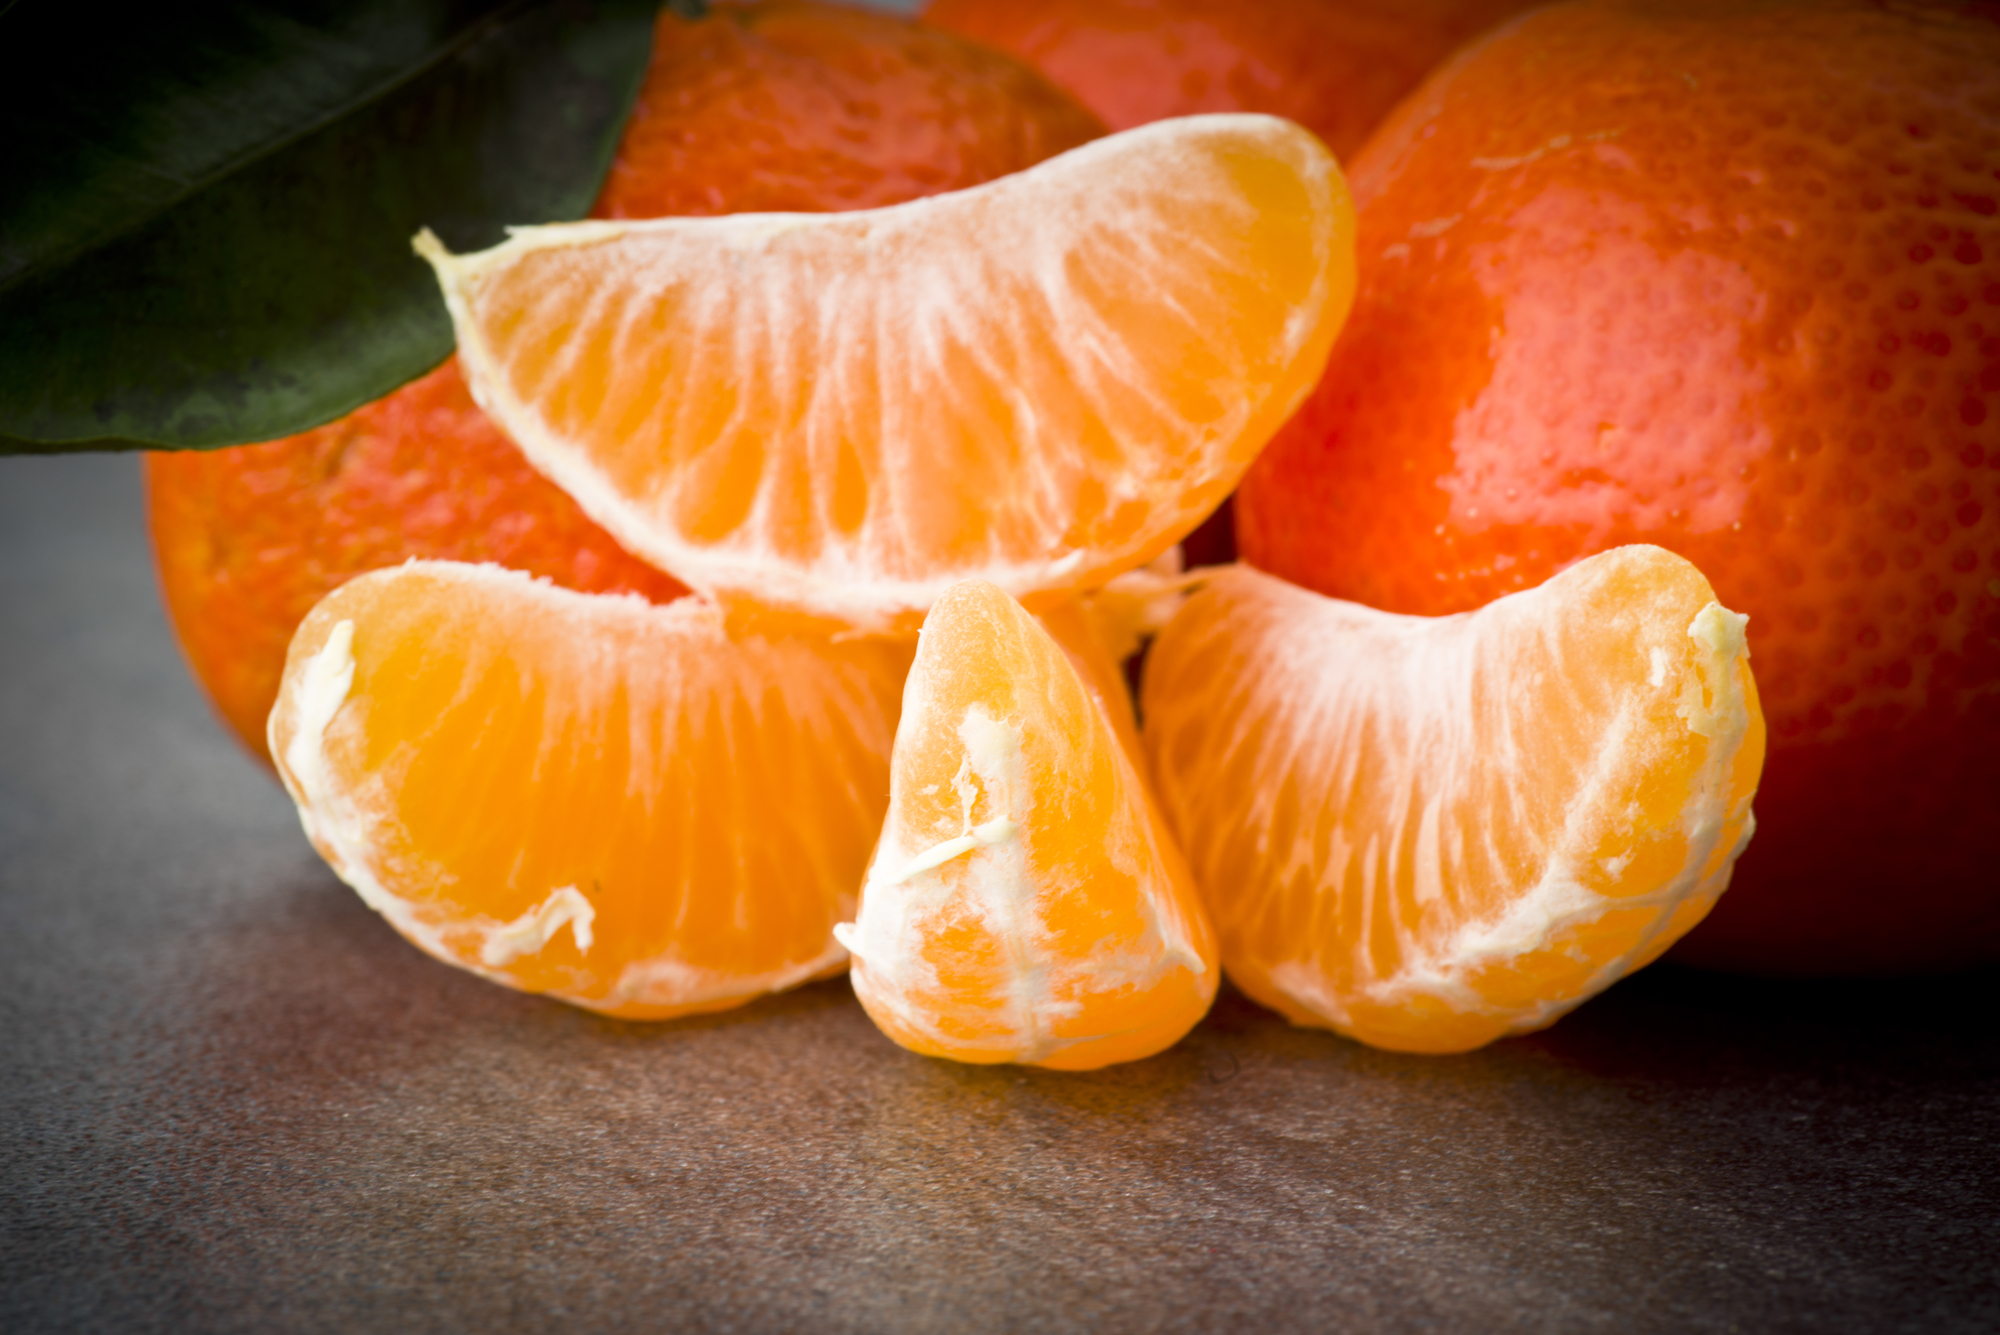 Ripe orange tangerine clove on the gray table